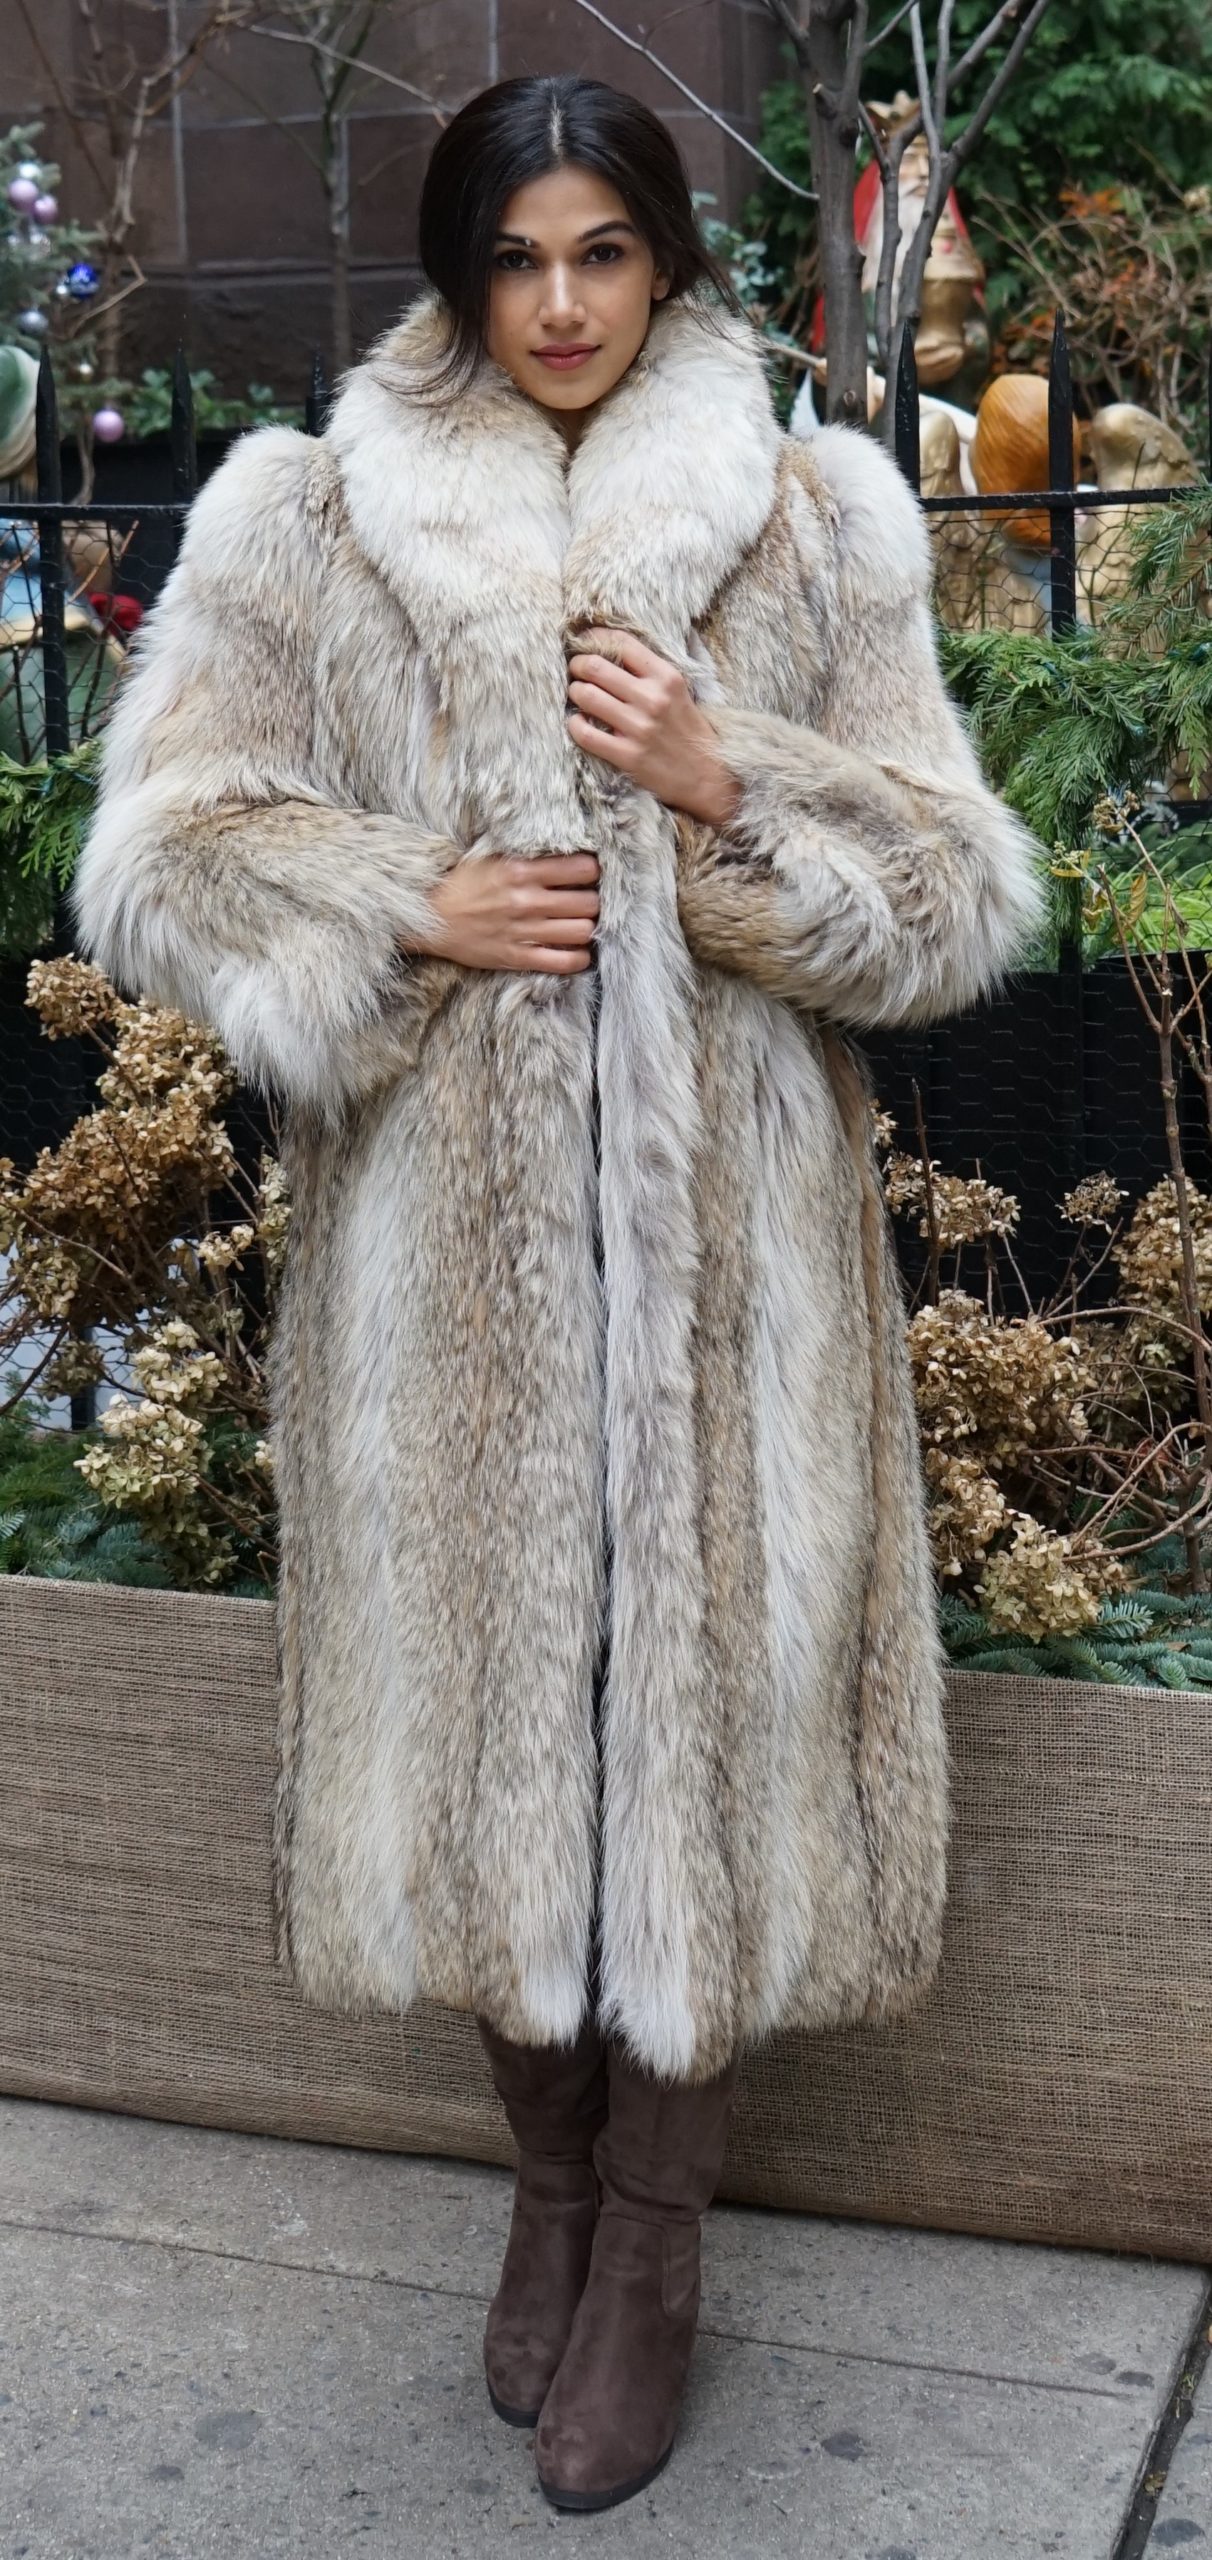 Full Length Coyote Coat